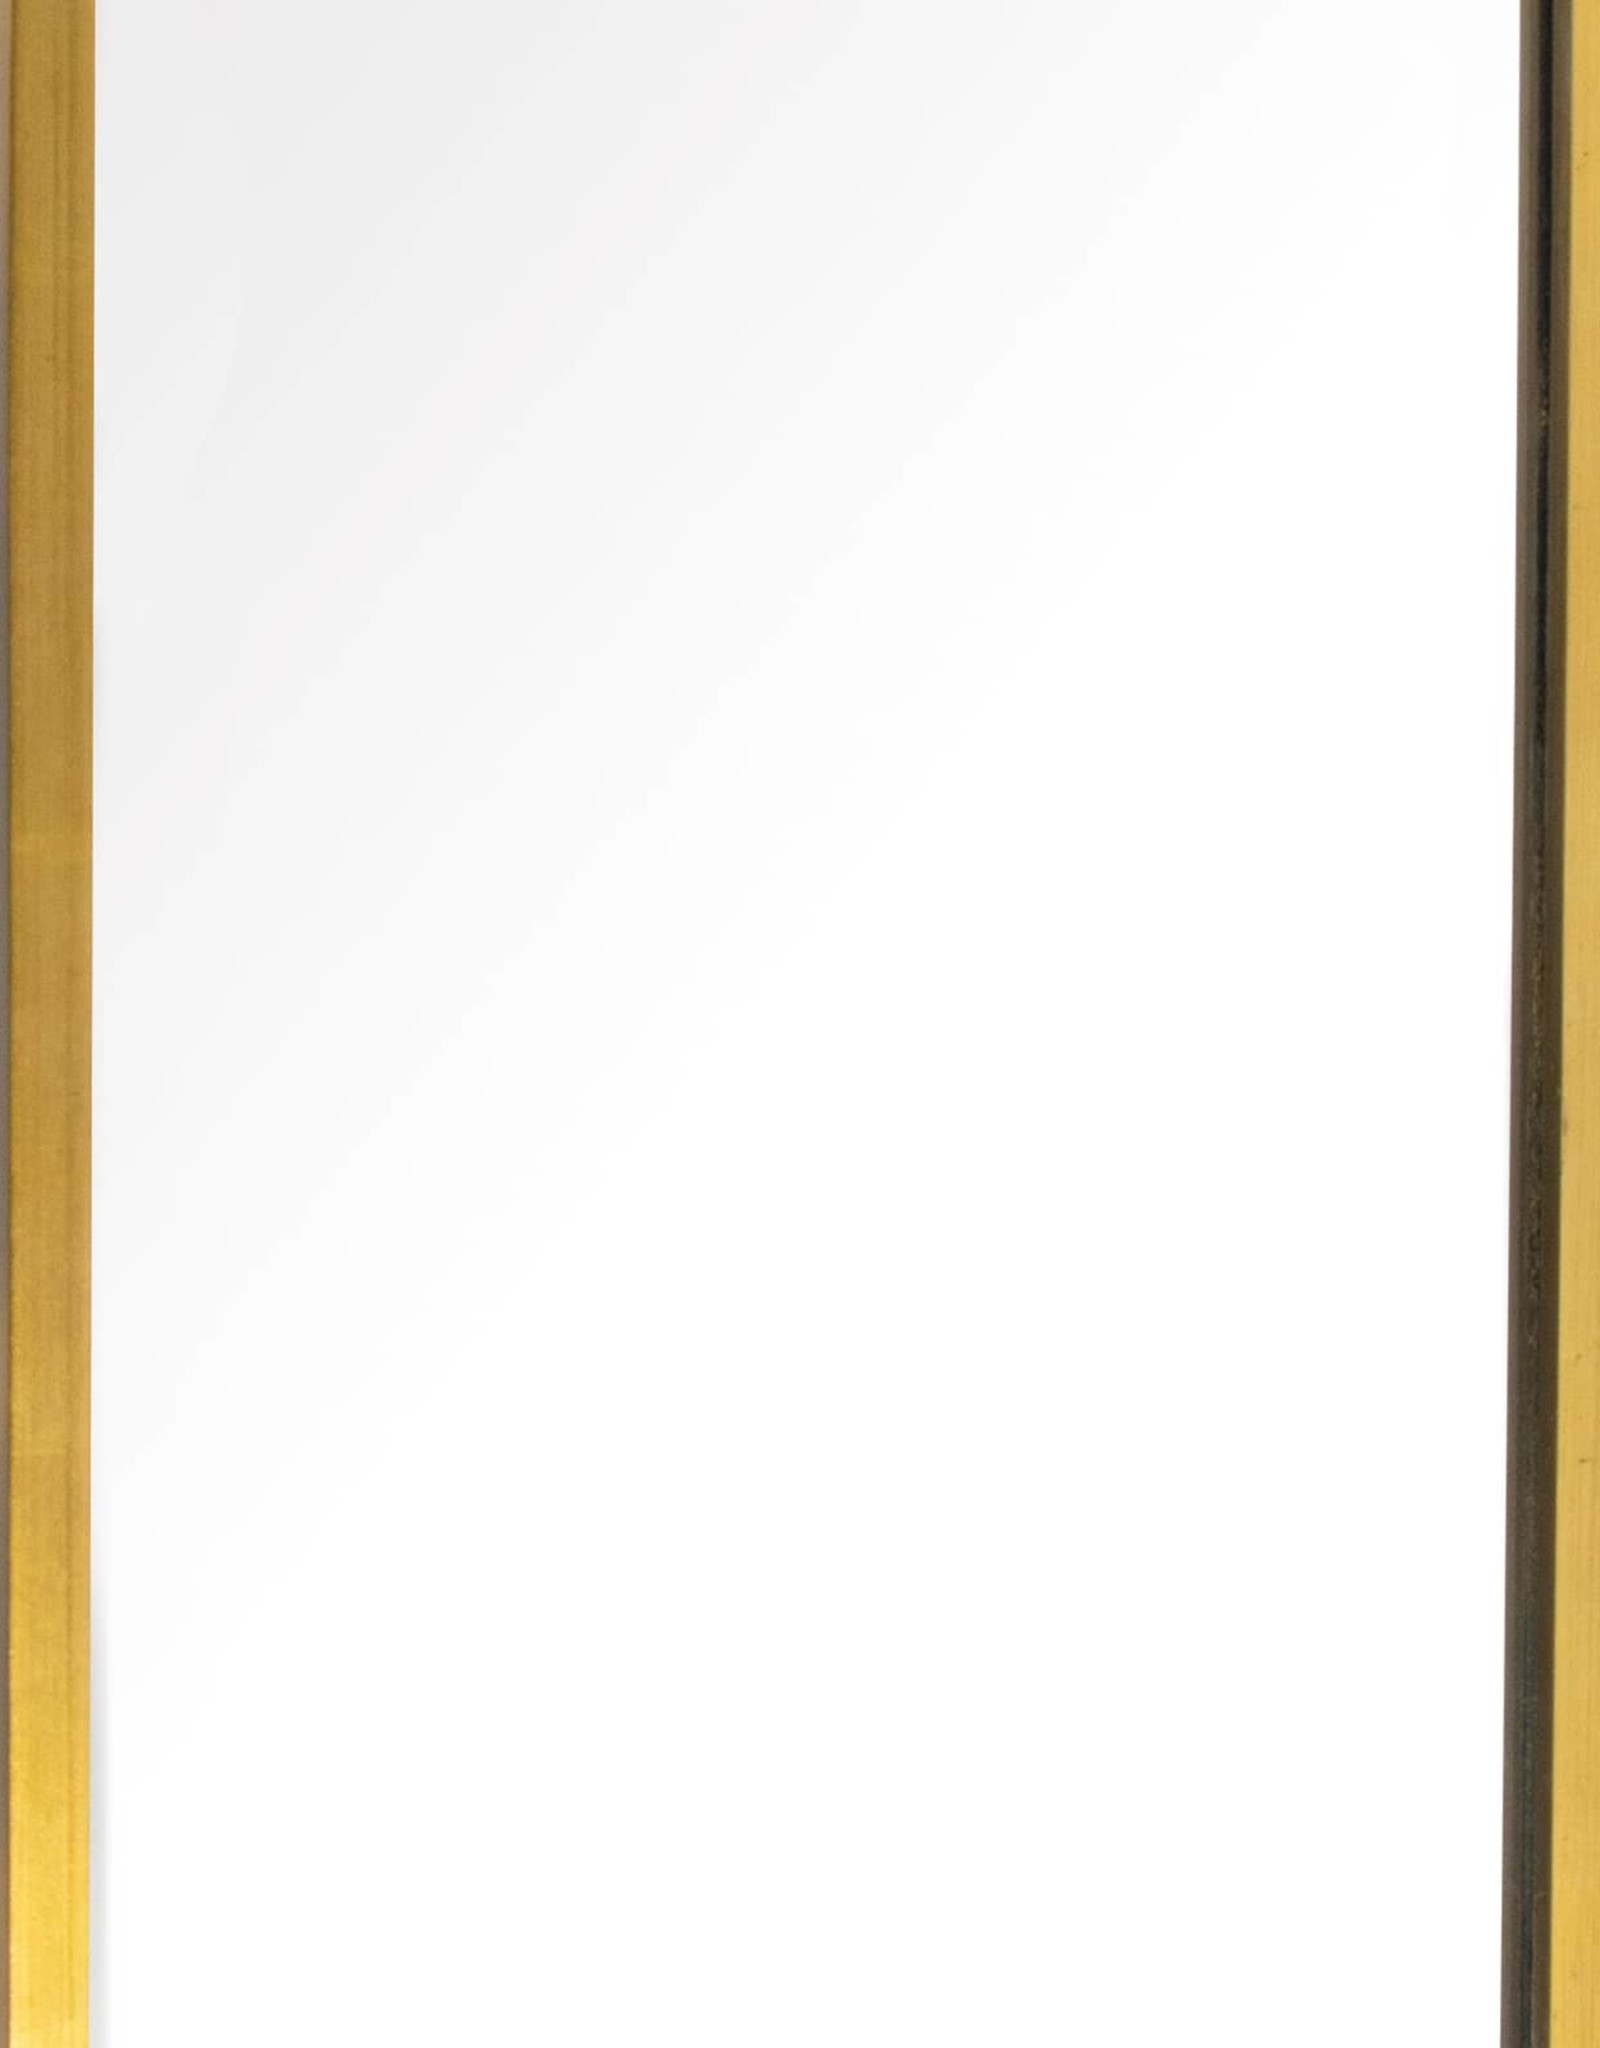 Regina Andrew Design Scarlett Mirror (Gold Leaf)